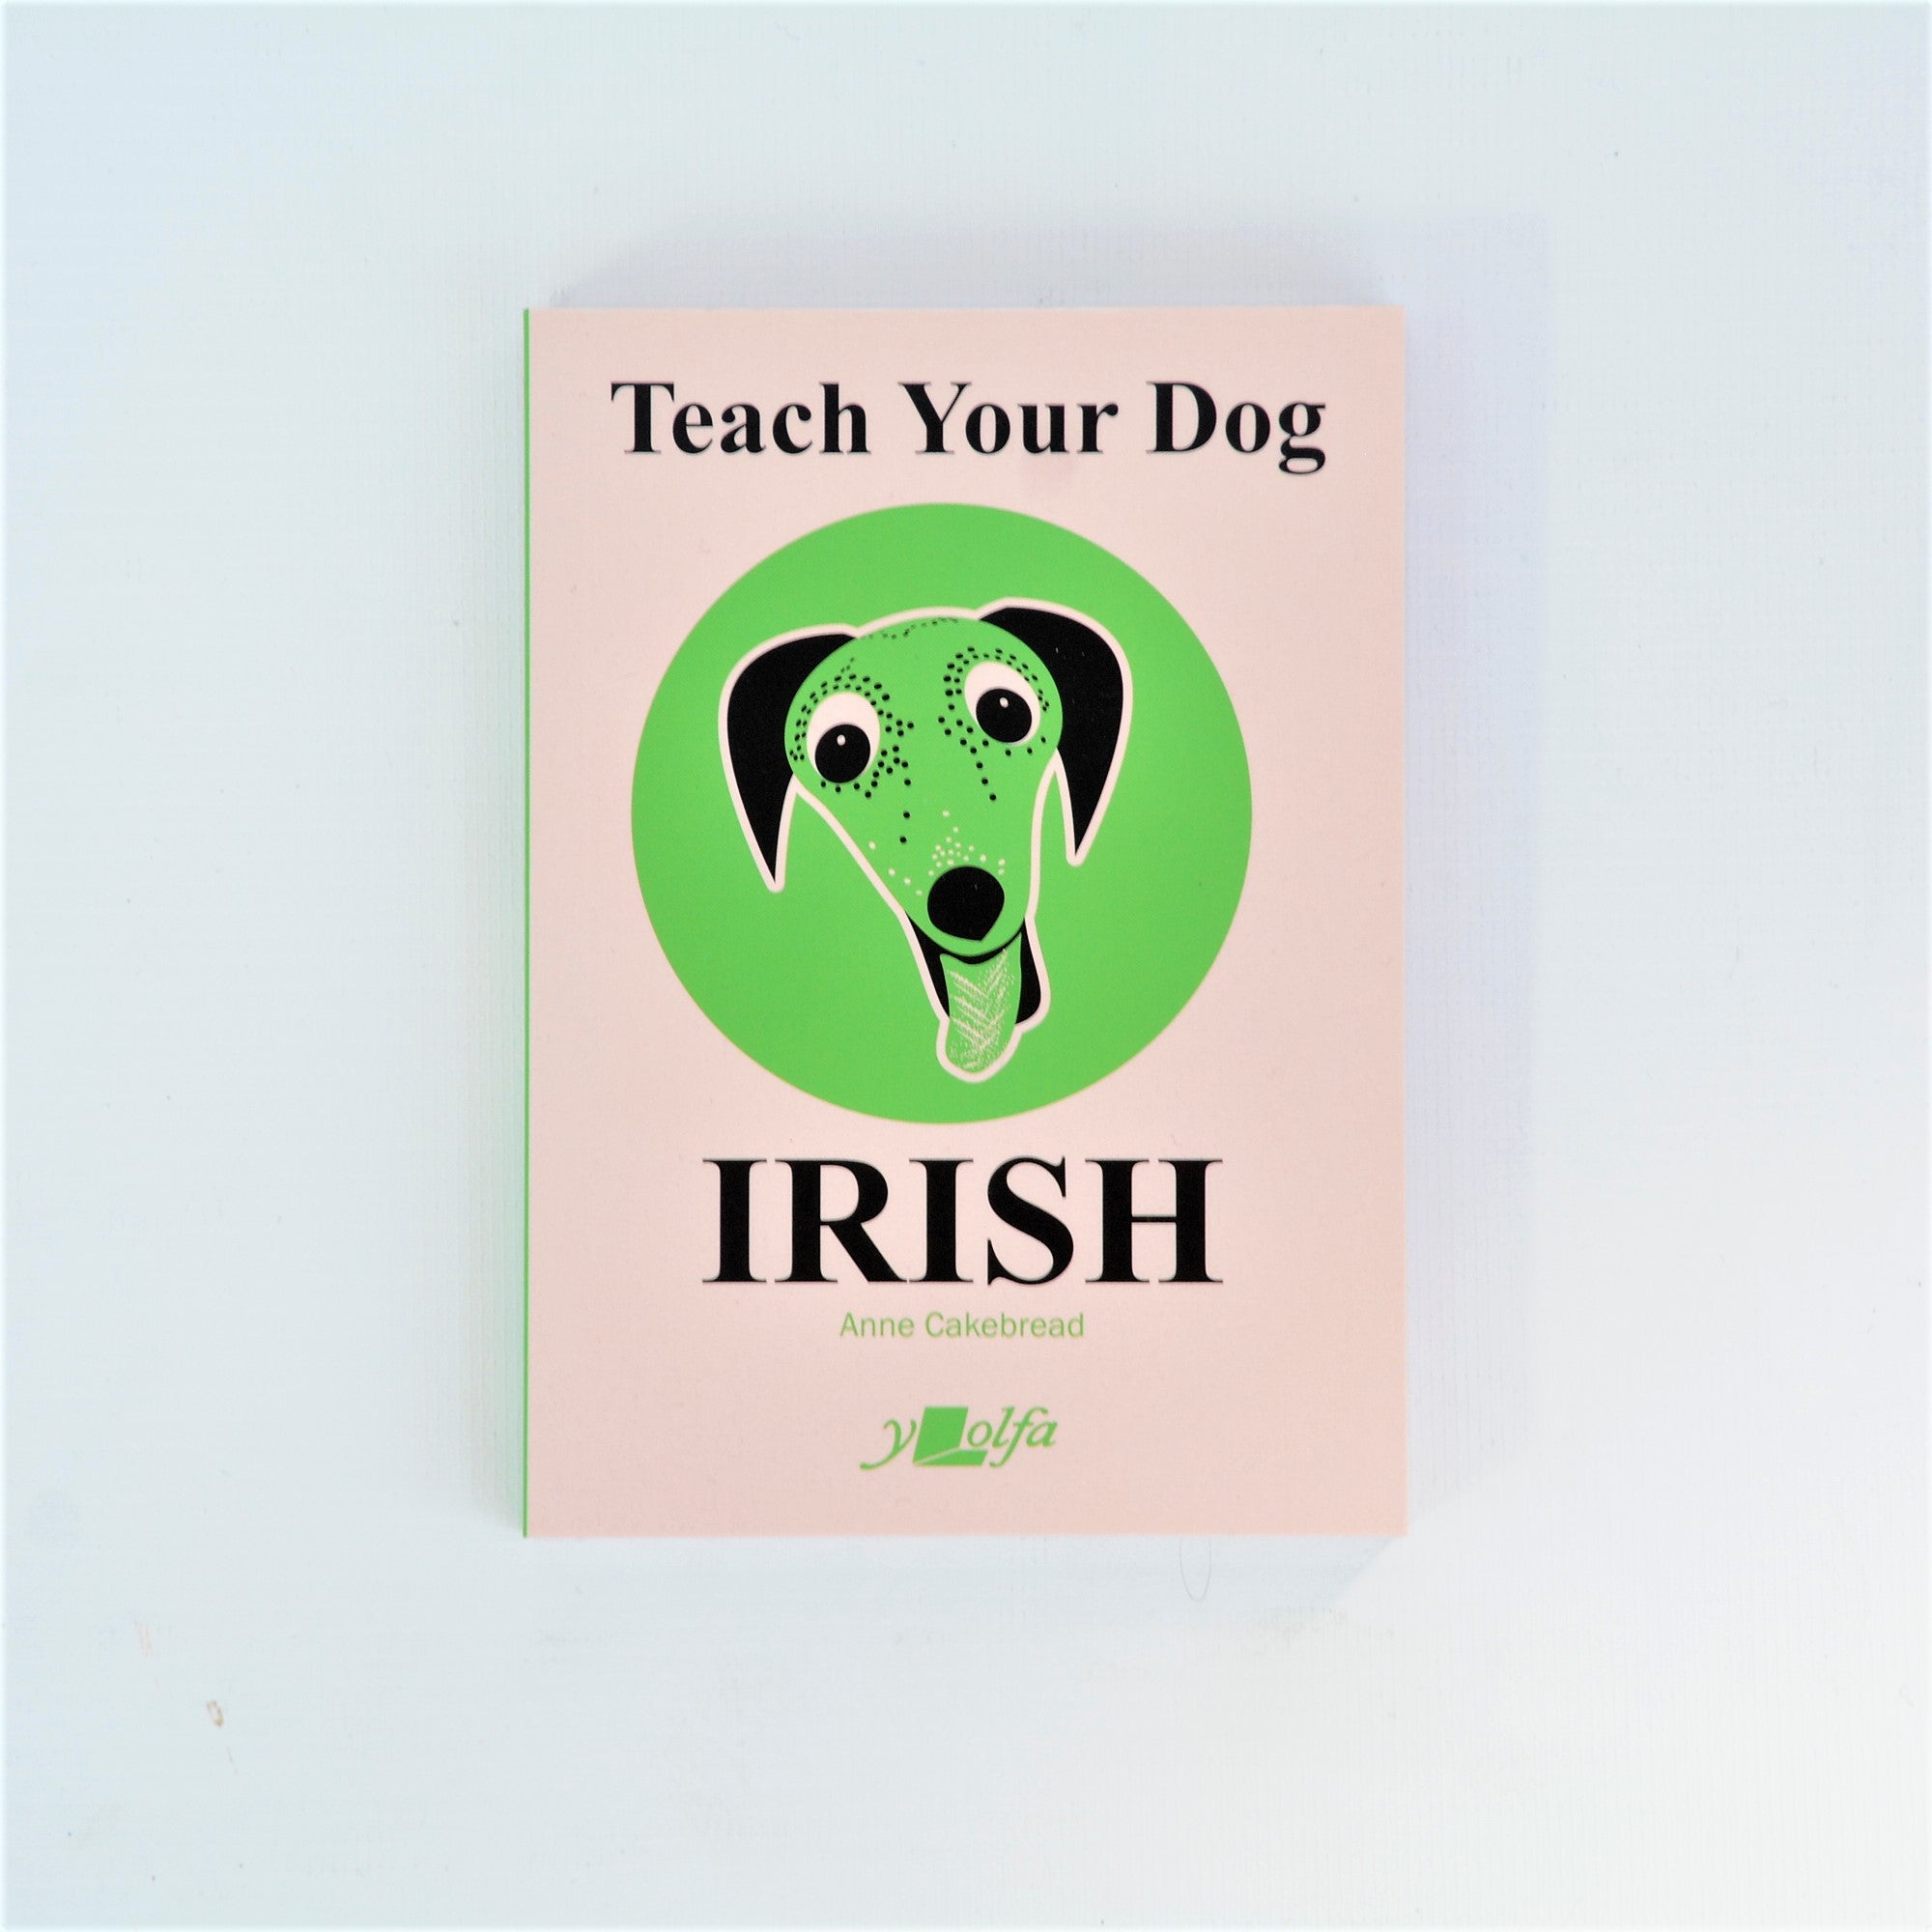 Teach Your Dog Irish